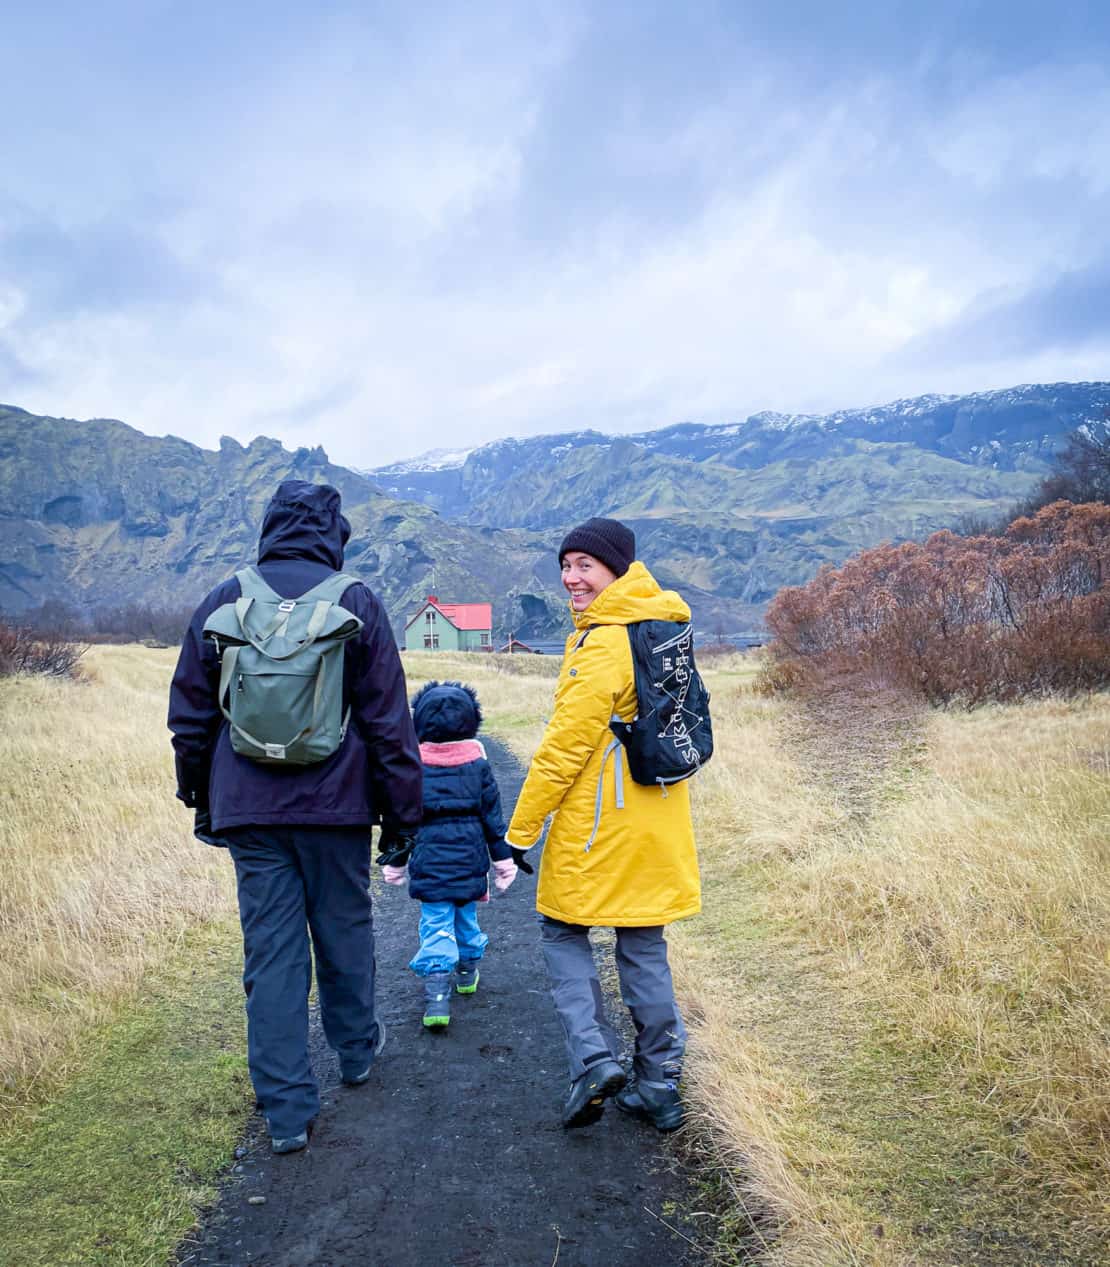 Iceland - Thorsmork park - family walking on a path towards a church